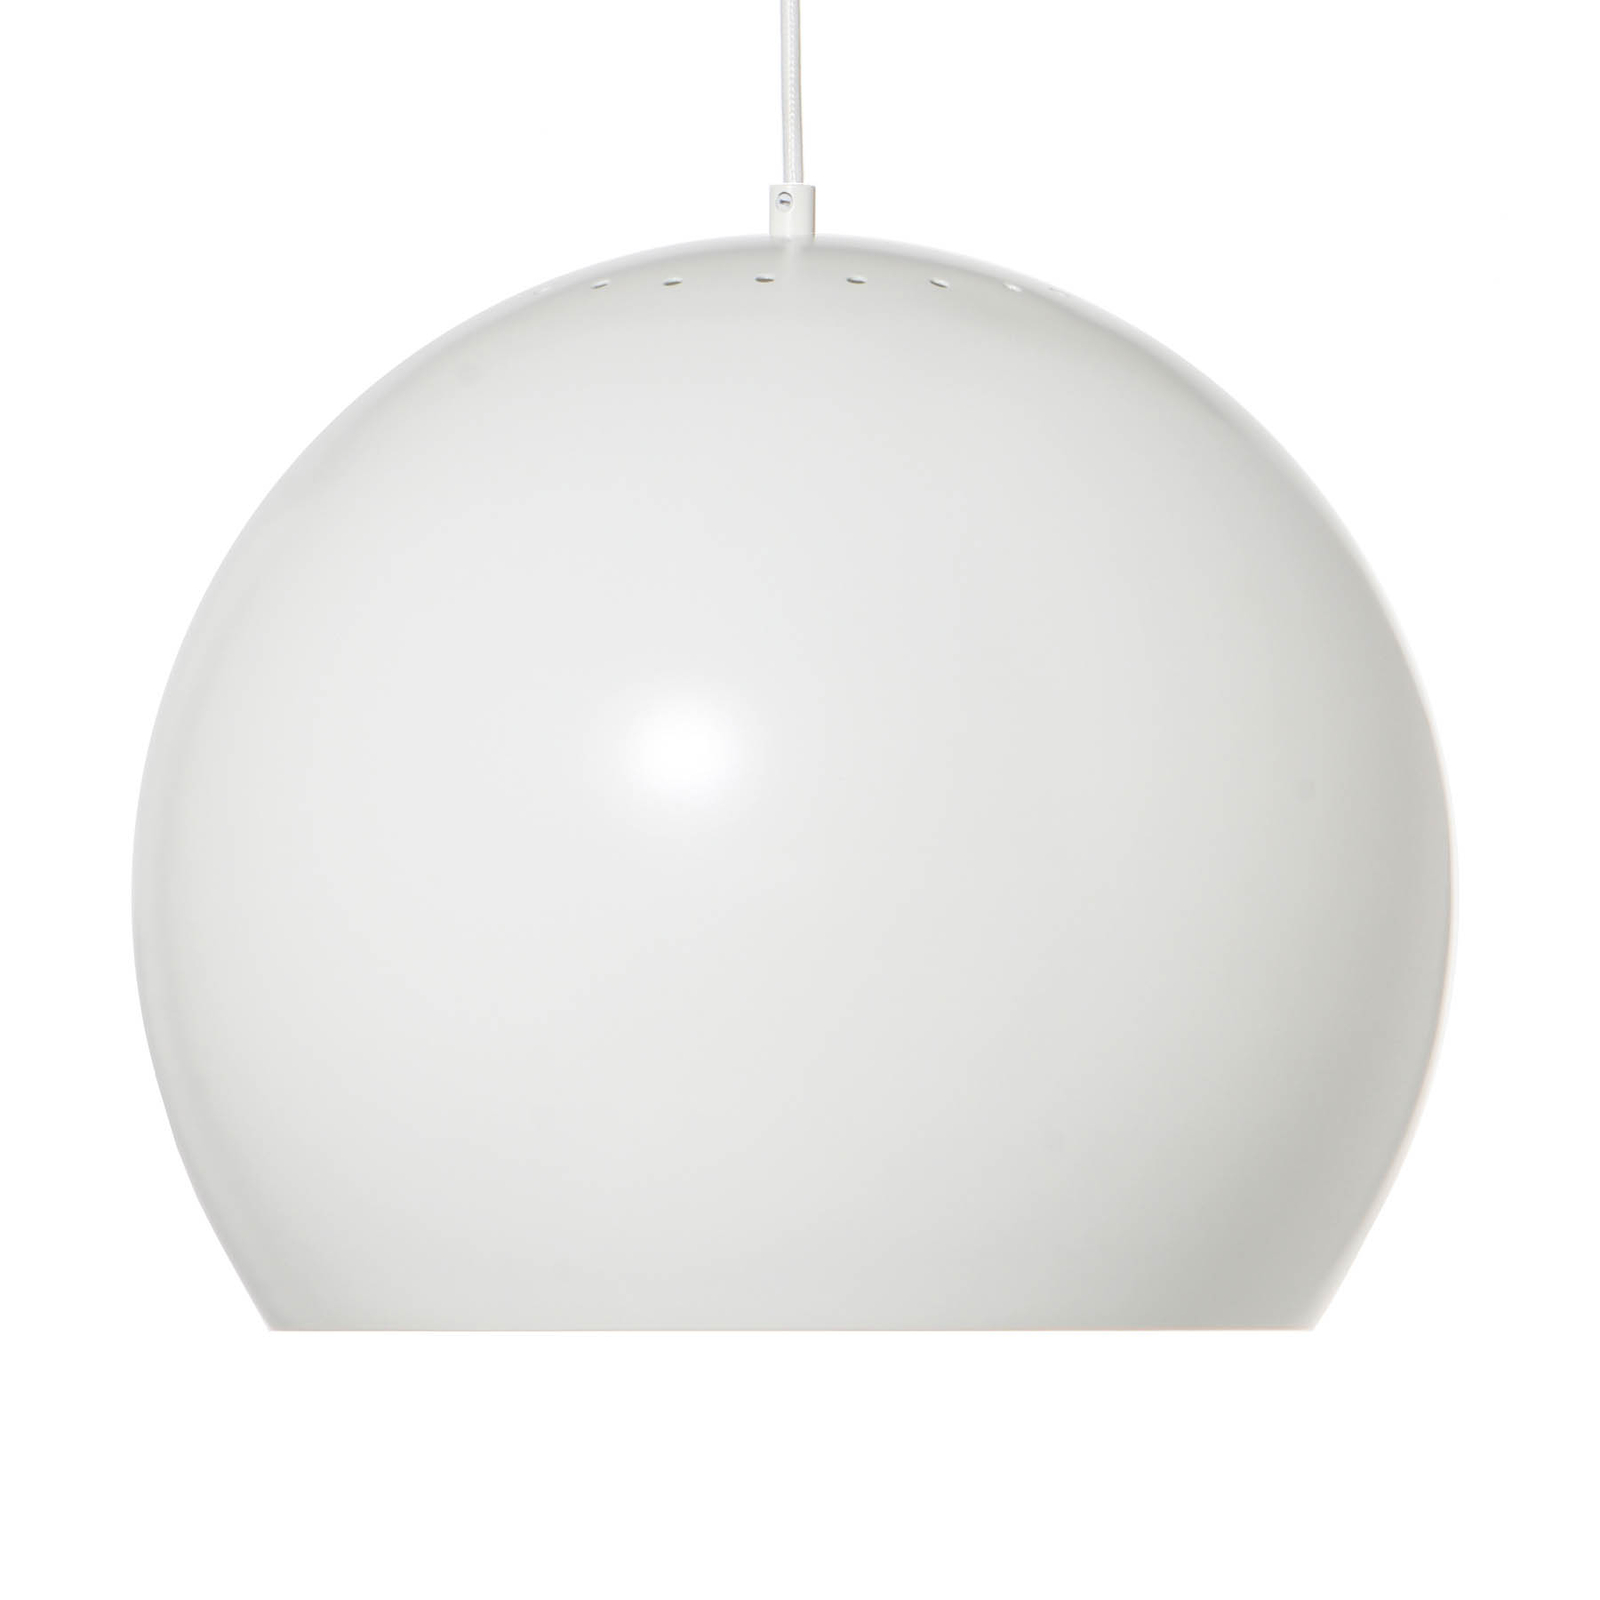 FRANDSEN gömb függő lámpa Ø 40 cm, fehér